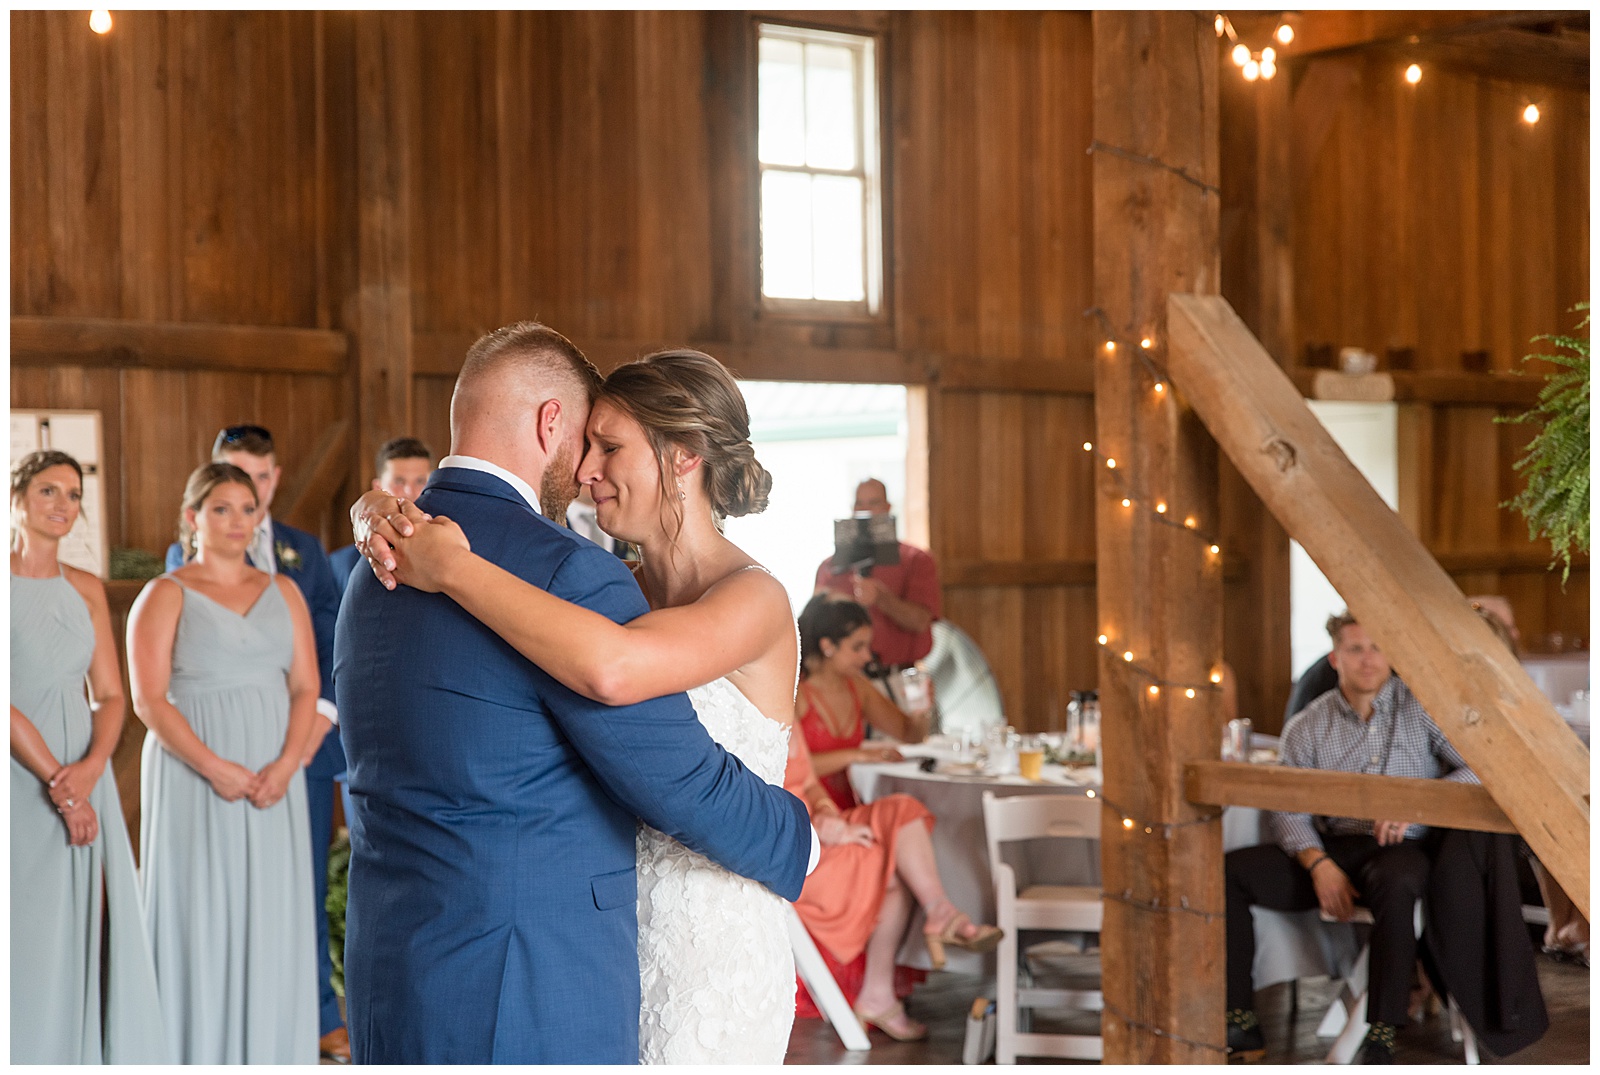 bride and groom slow dancing inside their barn wedding reception at lakefield weddings in manheim pennsylvania